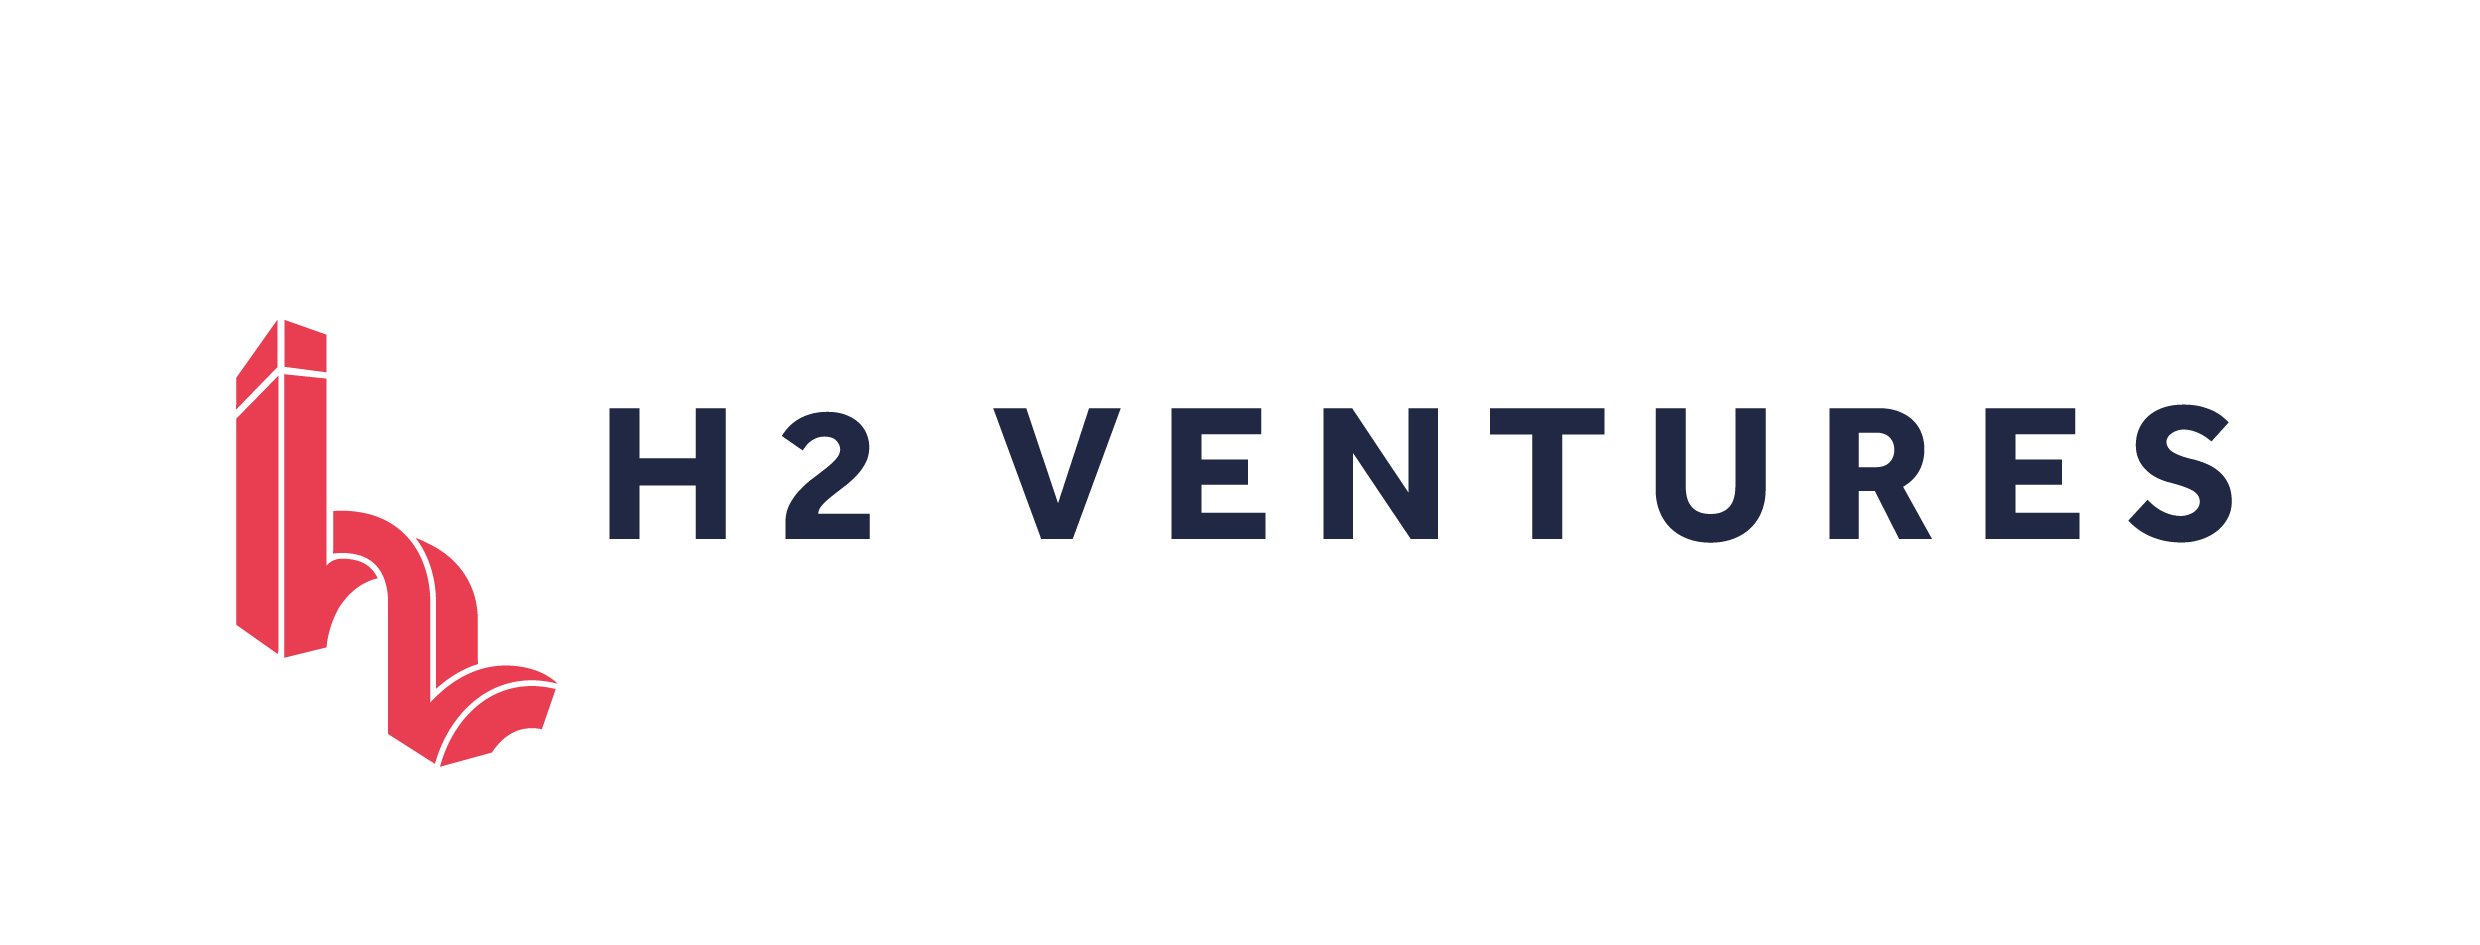 H2 Ventures